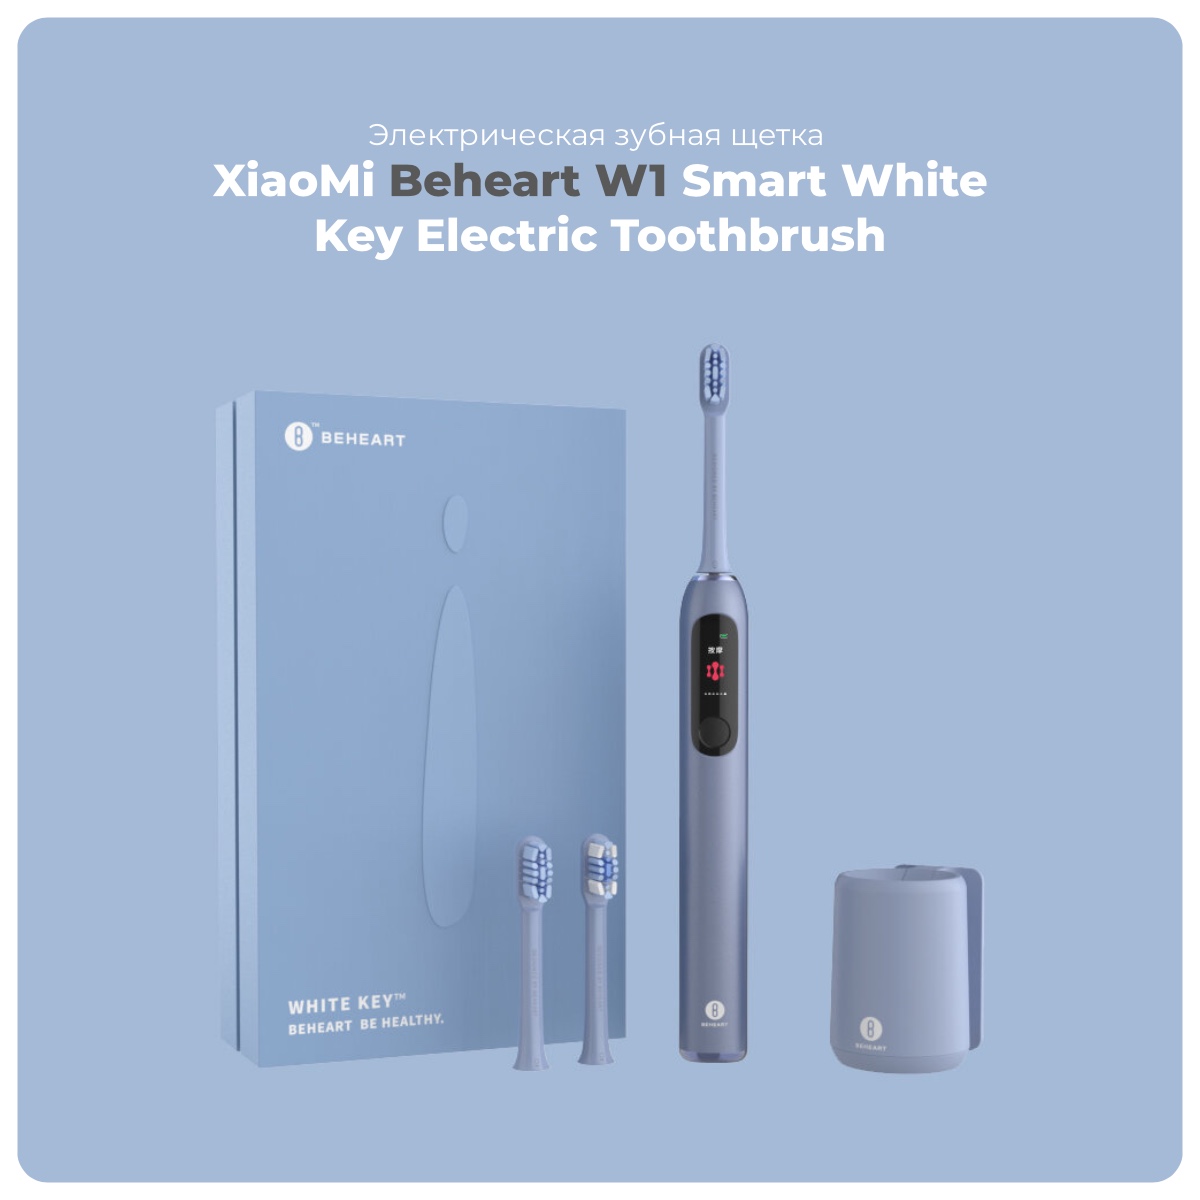 XiaoMi-Beheart-W1-Smart-White-Key-Electric-Toothbrush-01